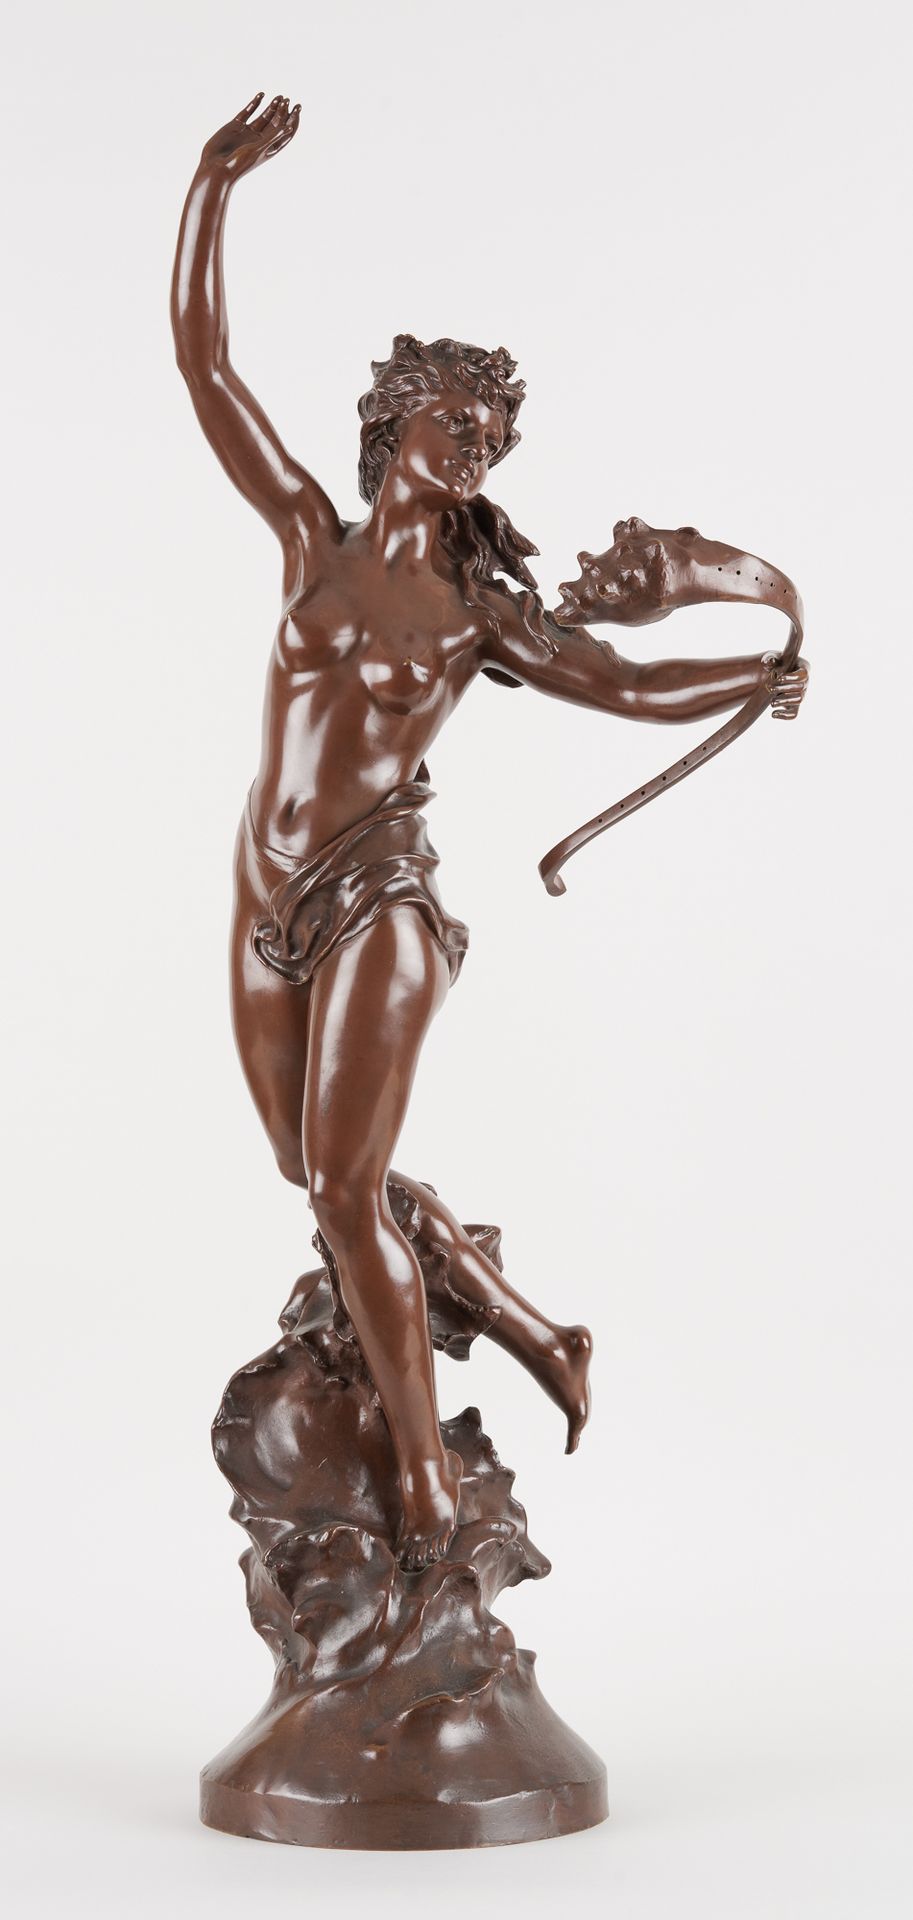 Marcel DÉBUT École française (1865-1933) 带有棕色阴影的青铜雕塑："海洋之诗"。

签名：马塞尔 首次亮相。

(乐器要&hellip;